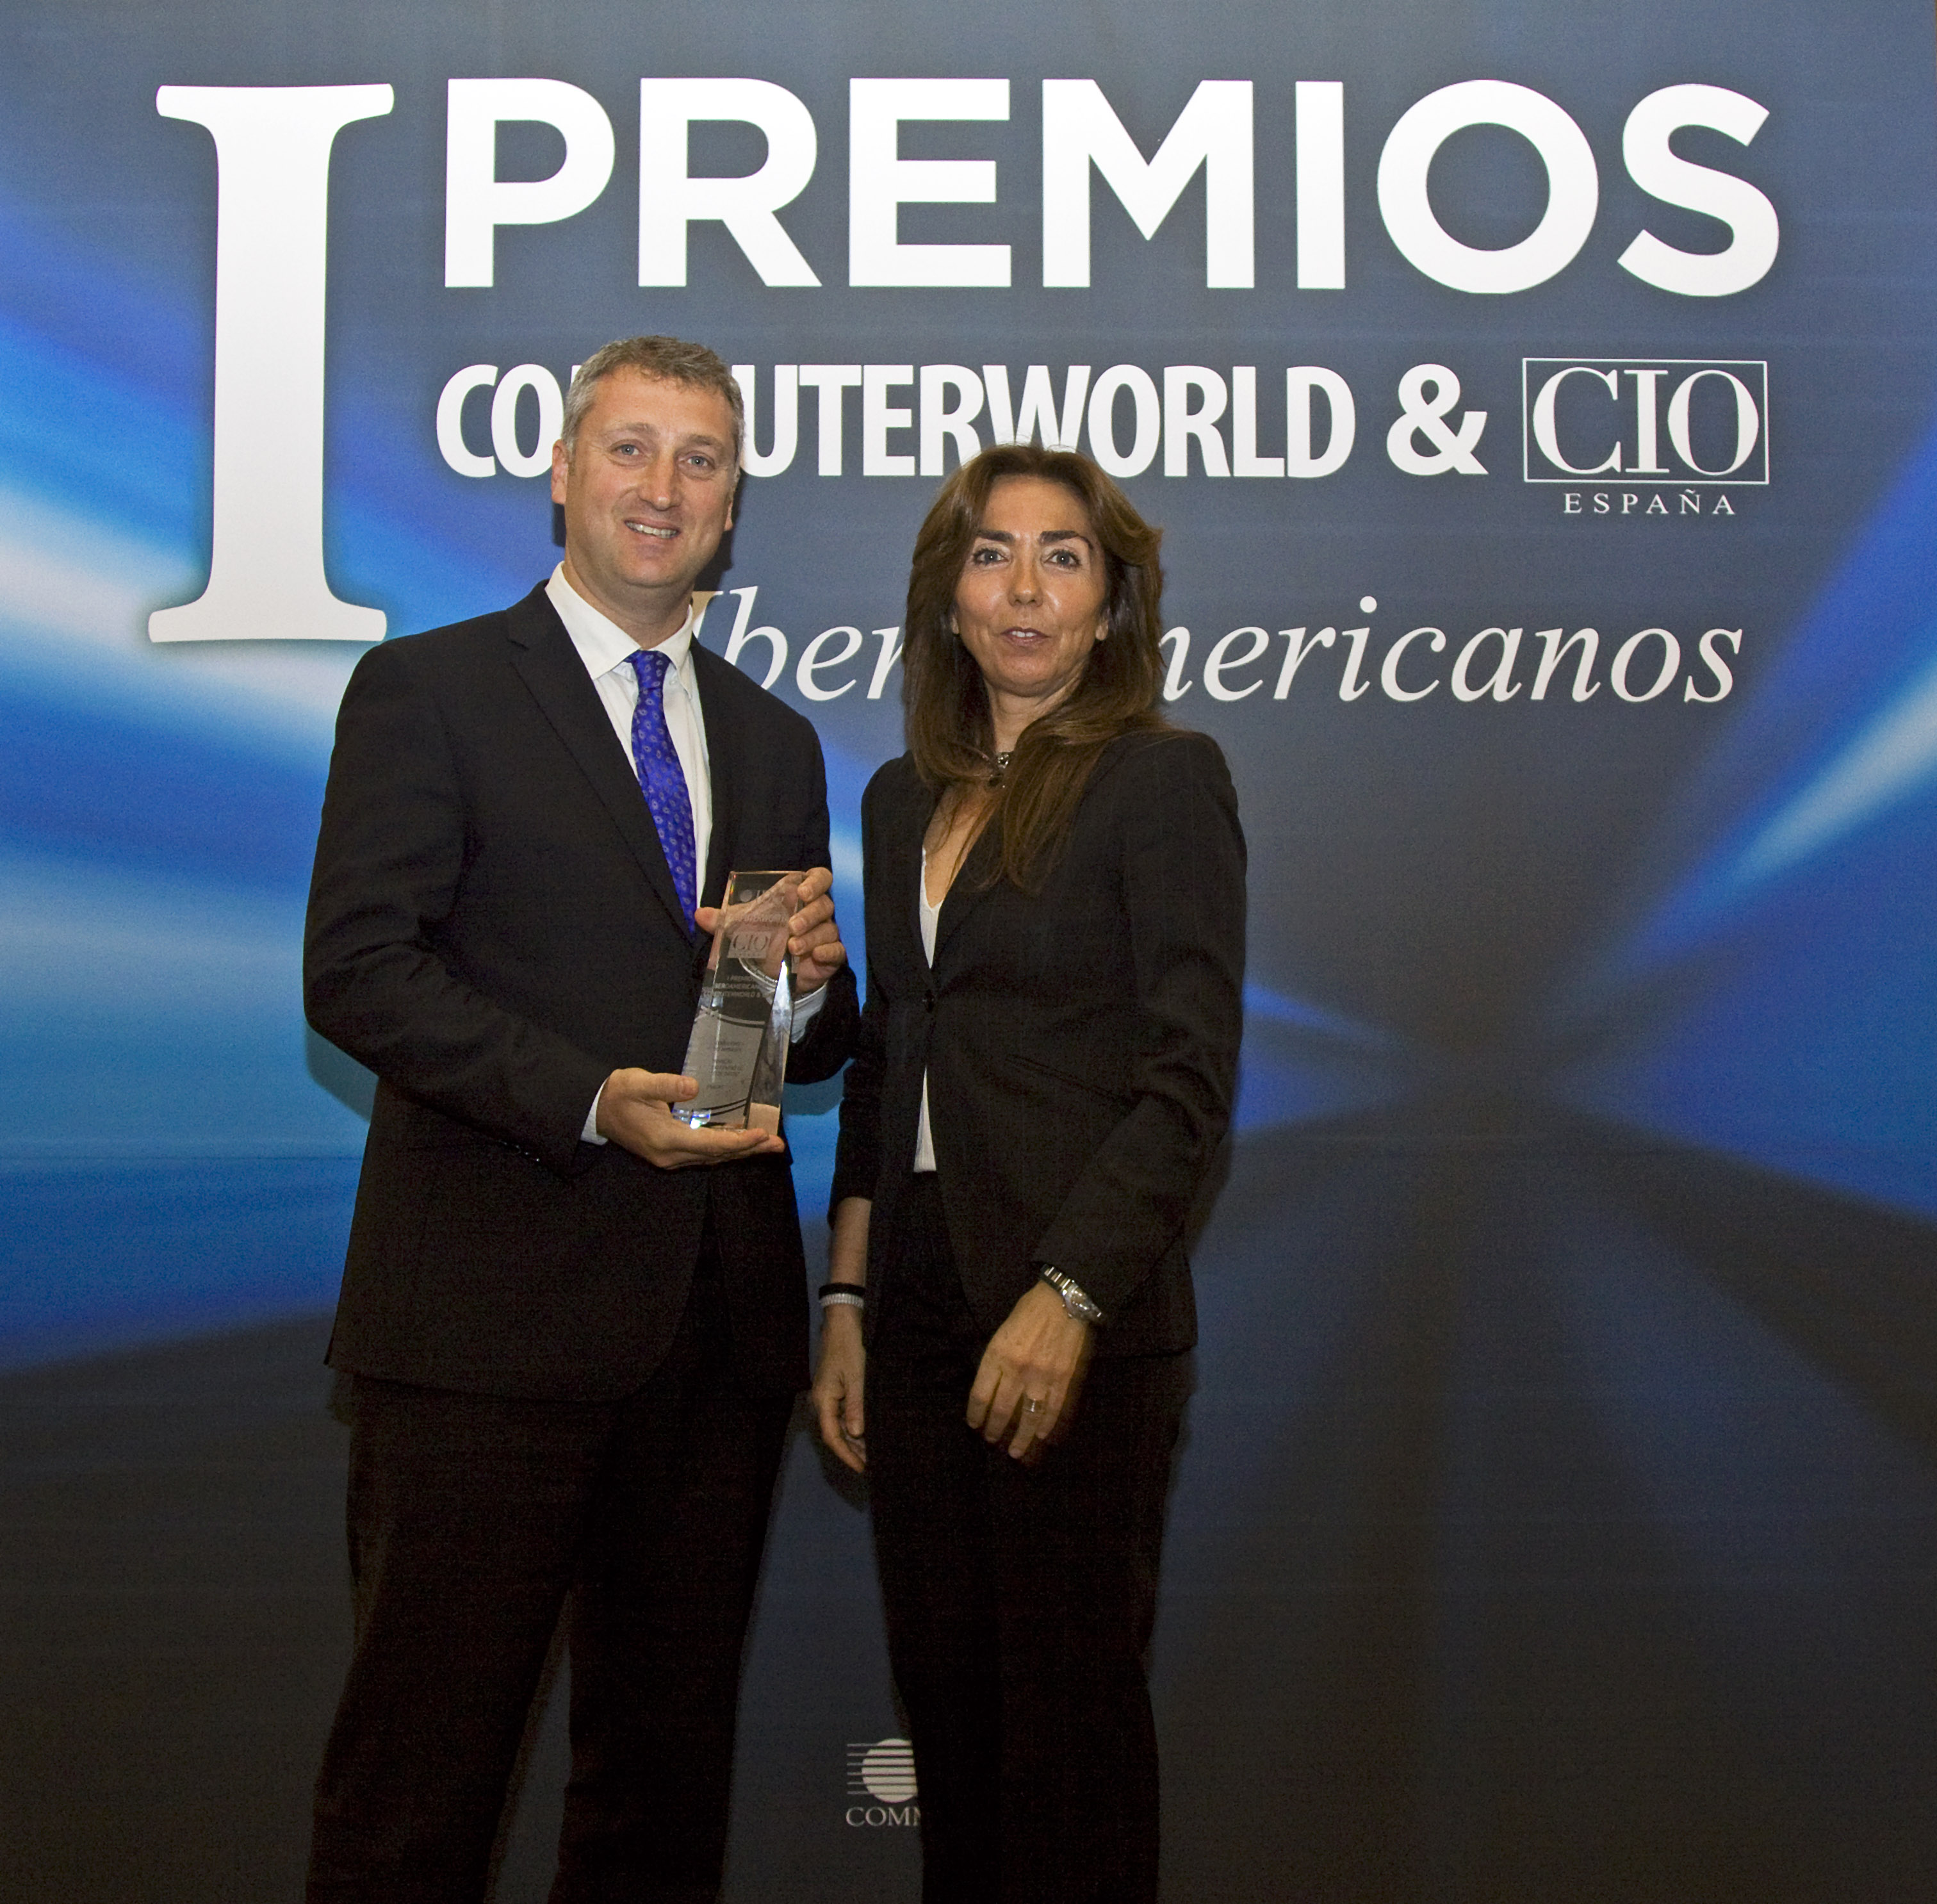 Premios Computerworld 2013 1